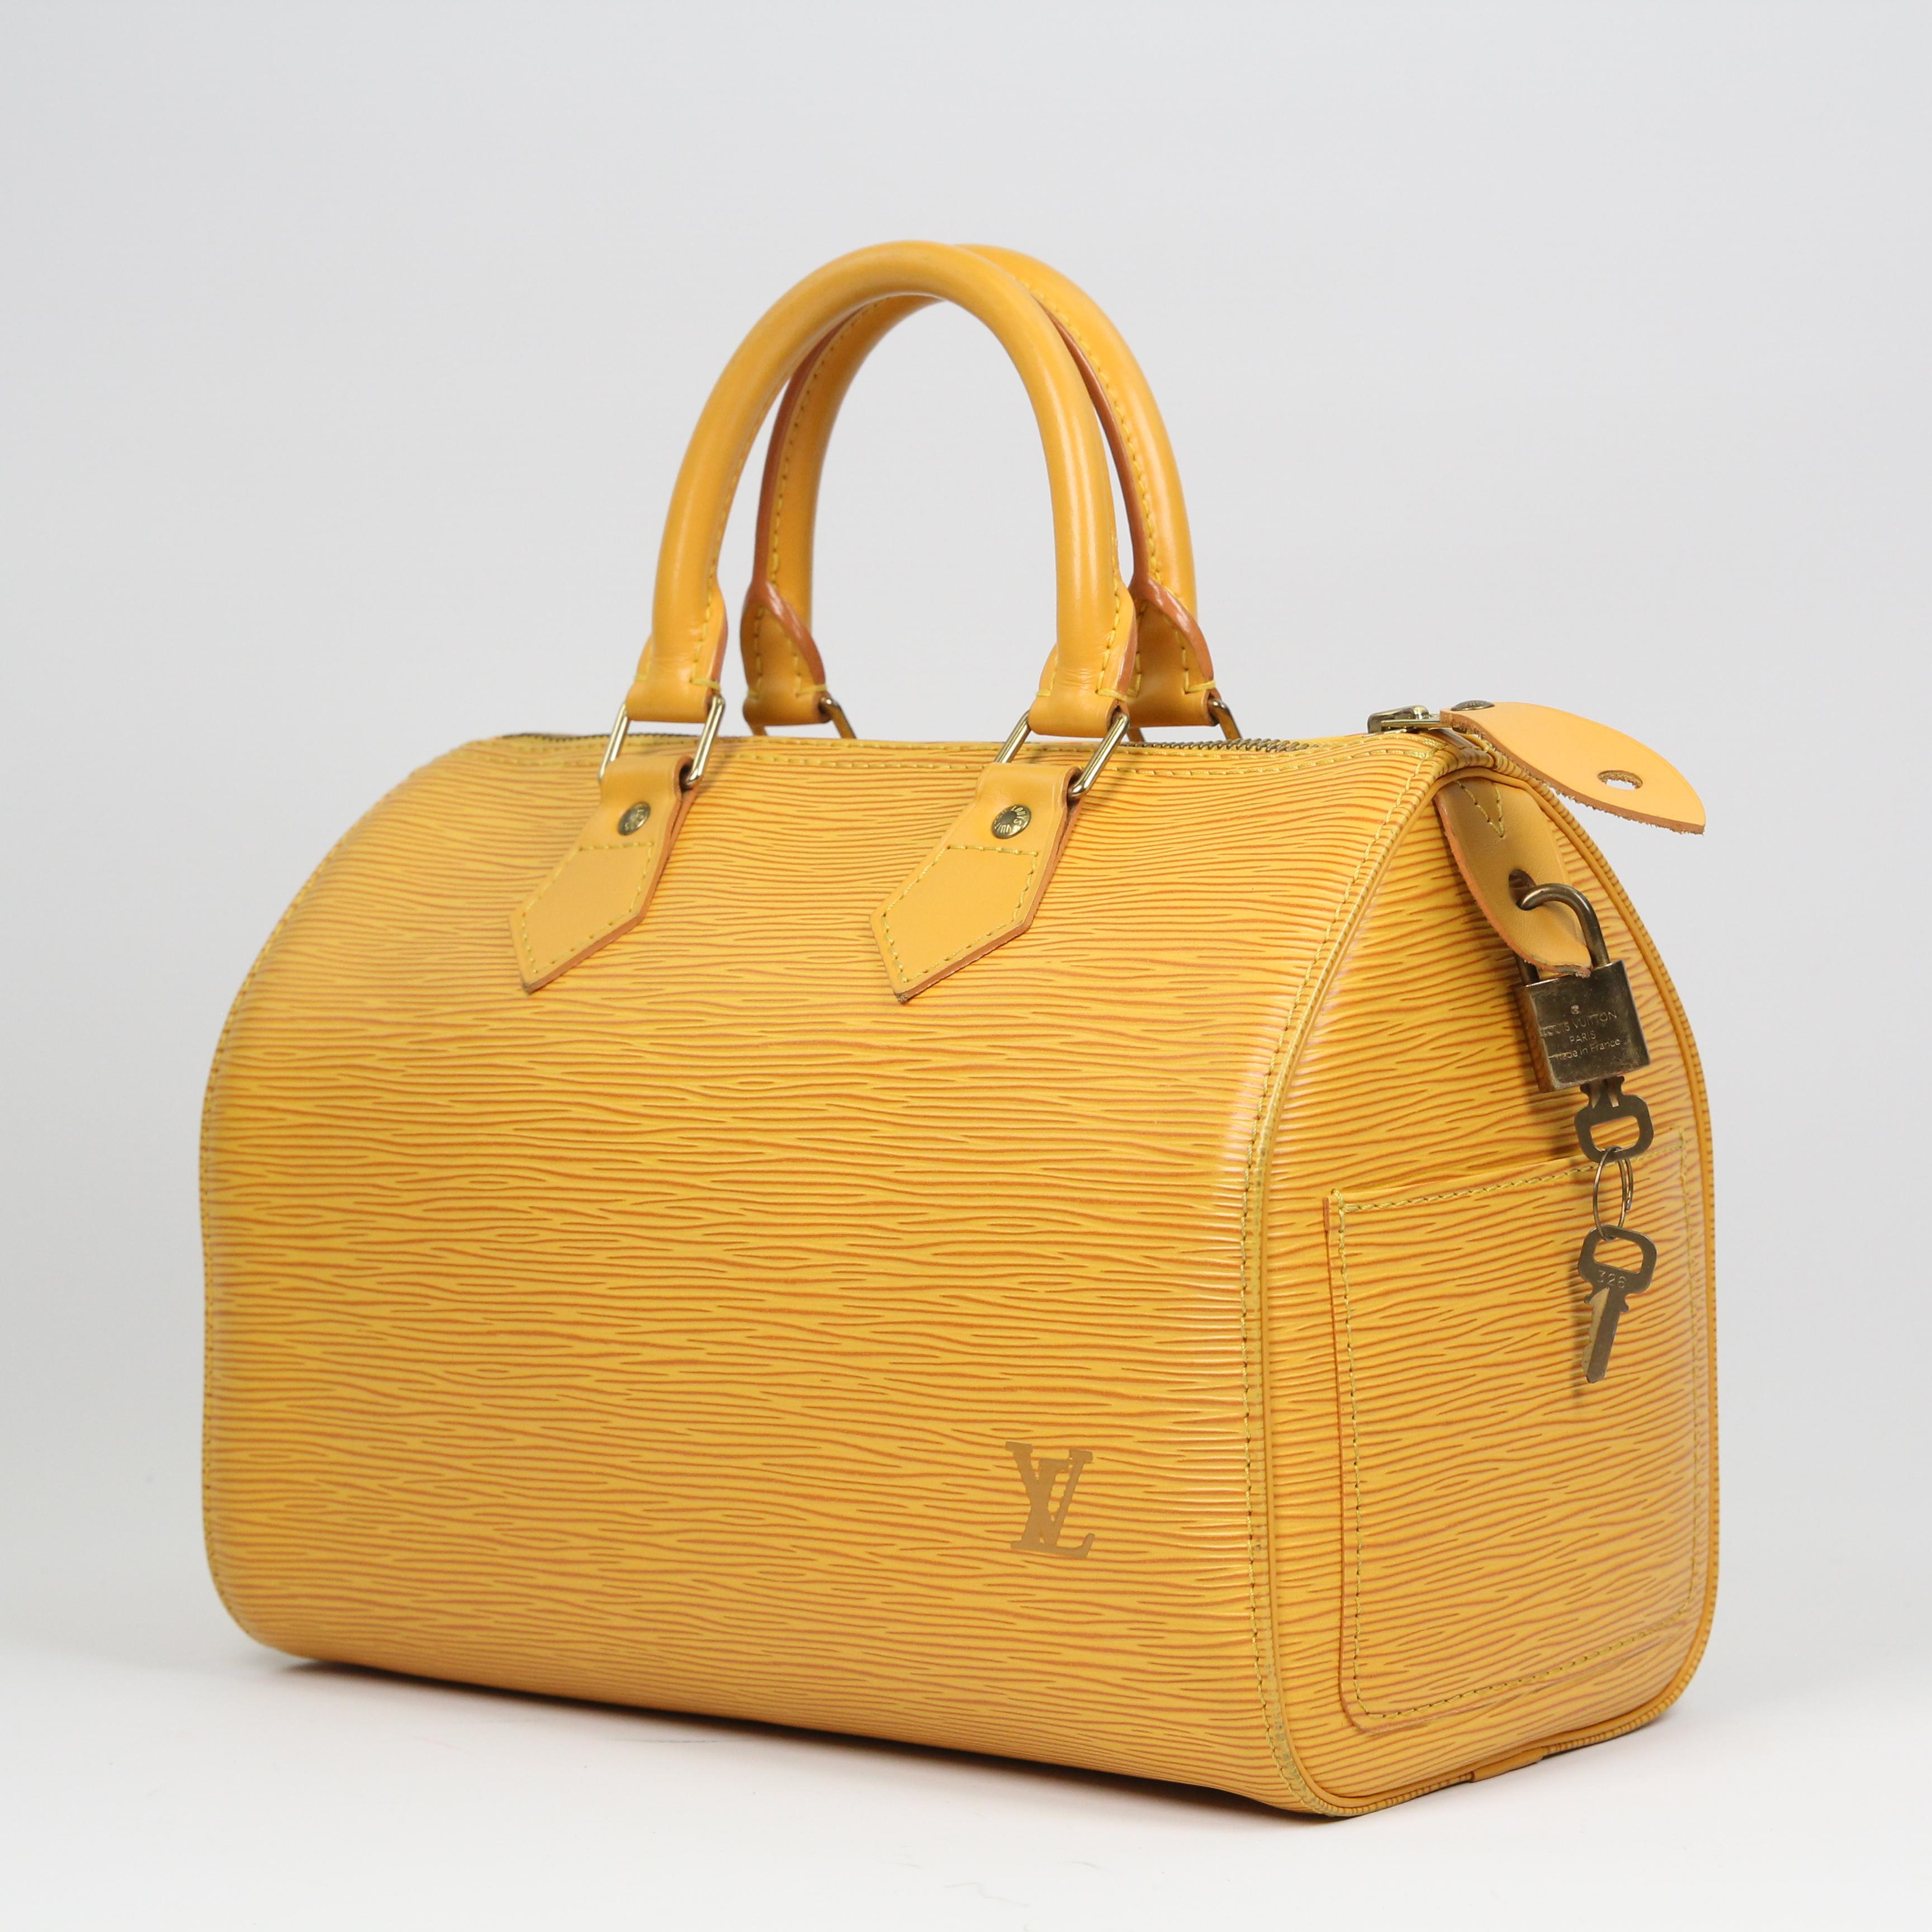 Louis Vuitton Speedy 25 leather handbag For Sale 1